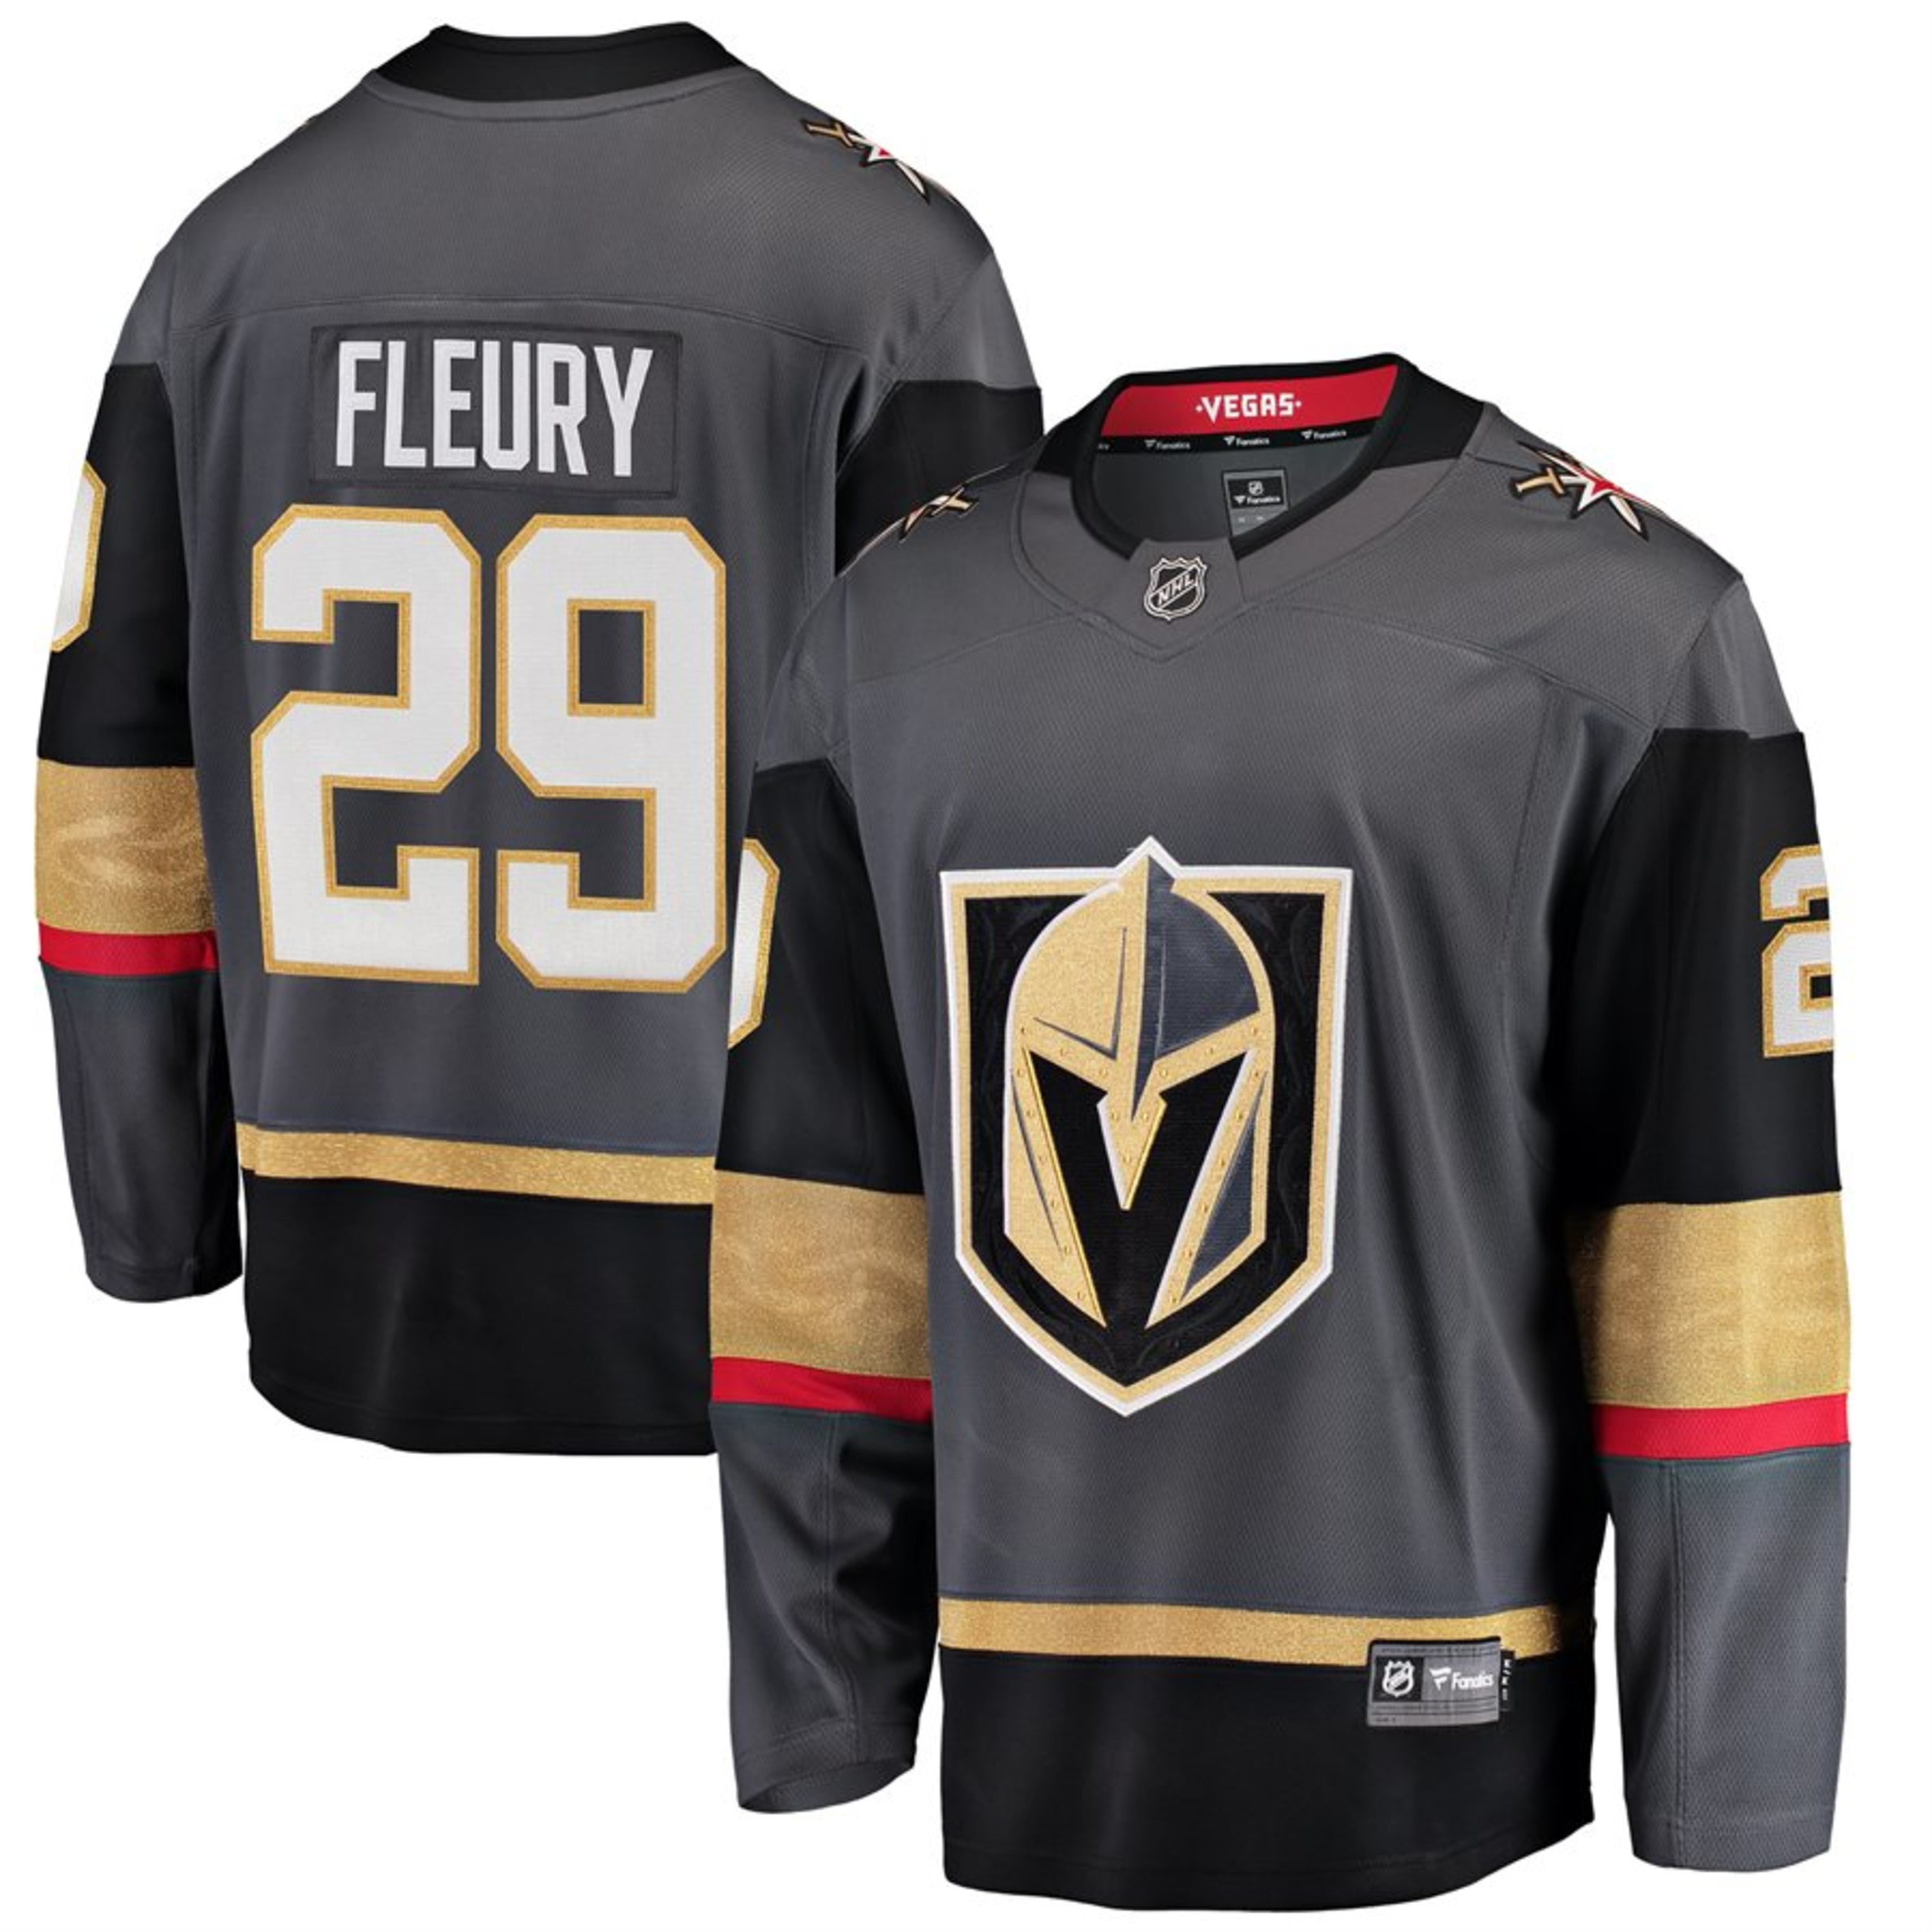 fleury hockey jersey